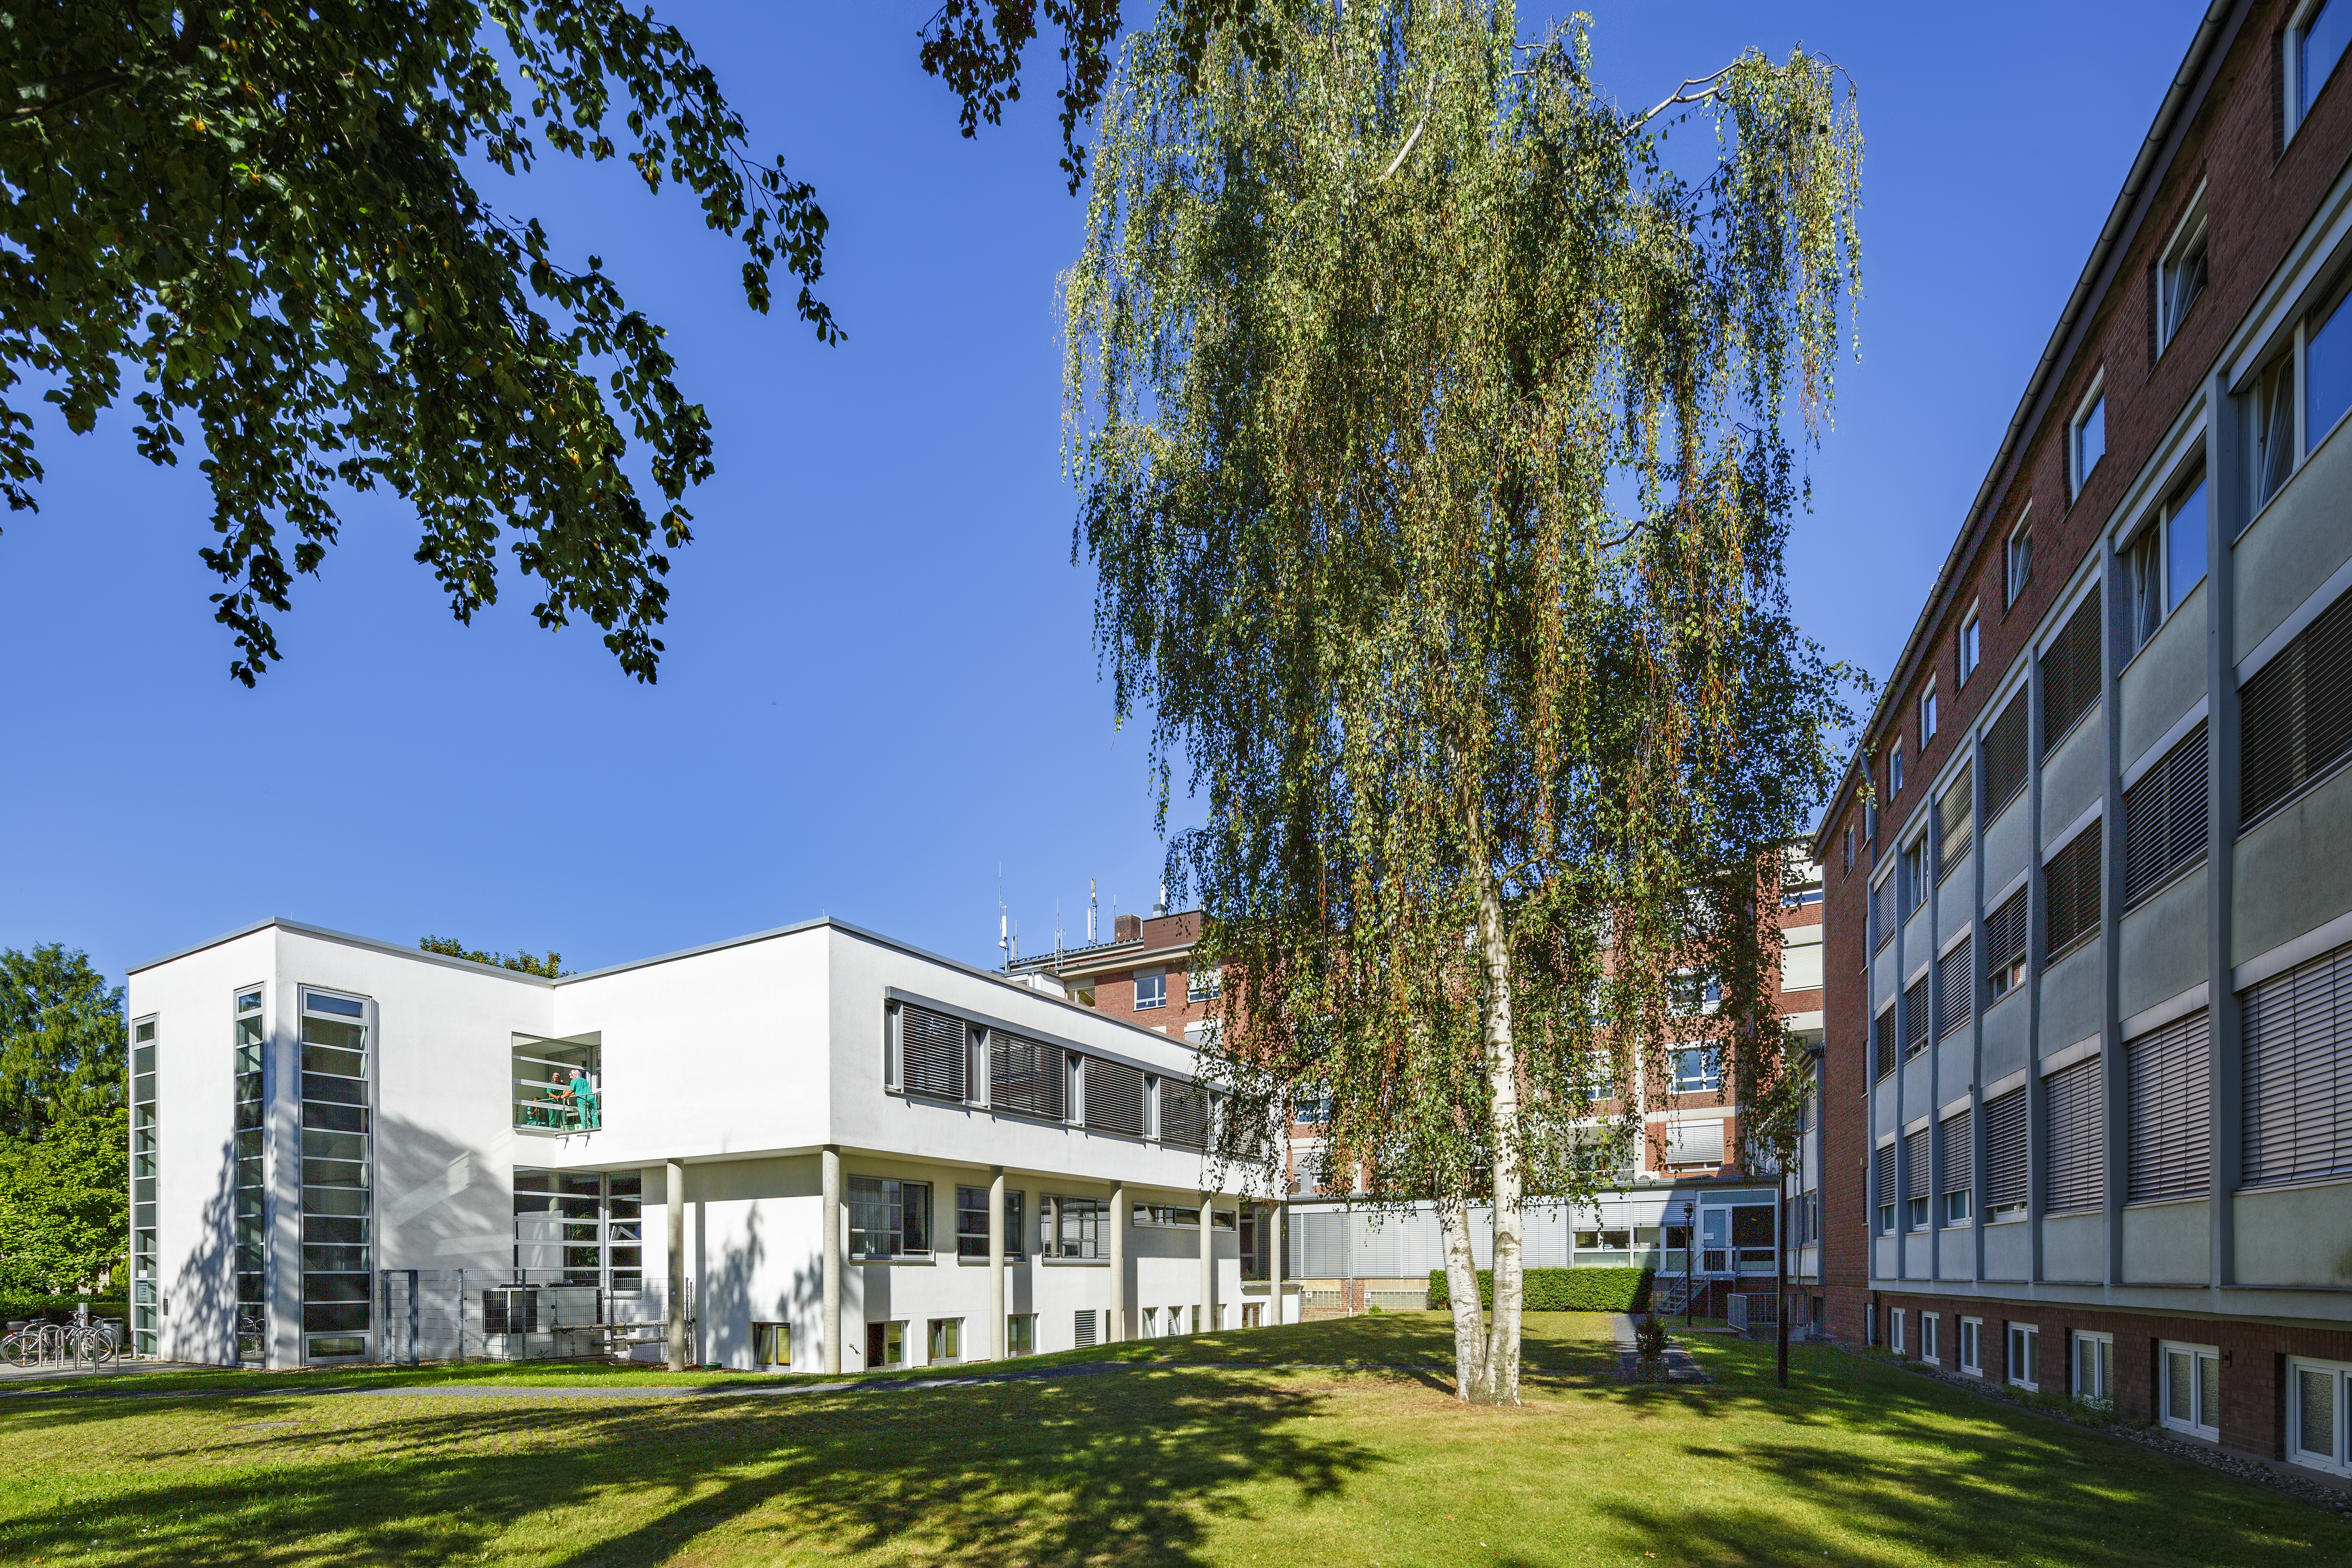 Maria-Hilf-Krankenhaus in Bergheim im Rhein-Erft-Kreis